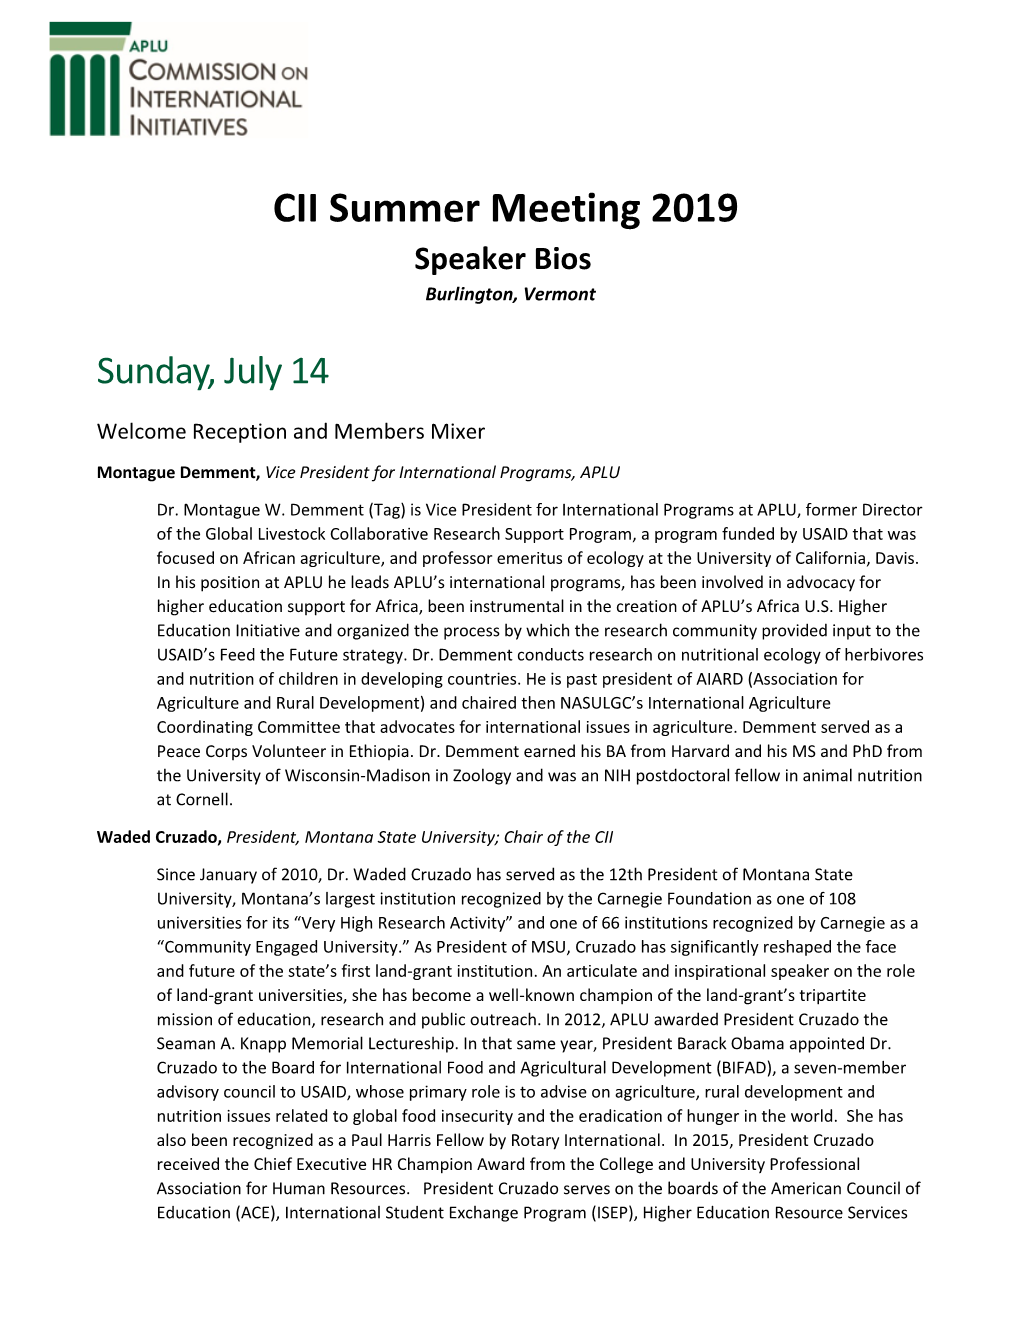 CII Summer Meeting 2019 Speaker Bios Burlington, Vermont